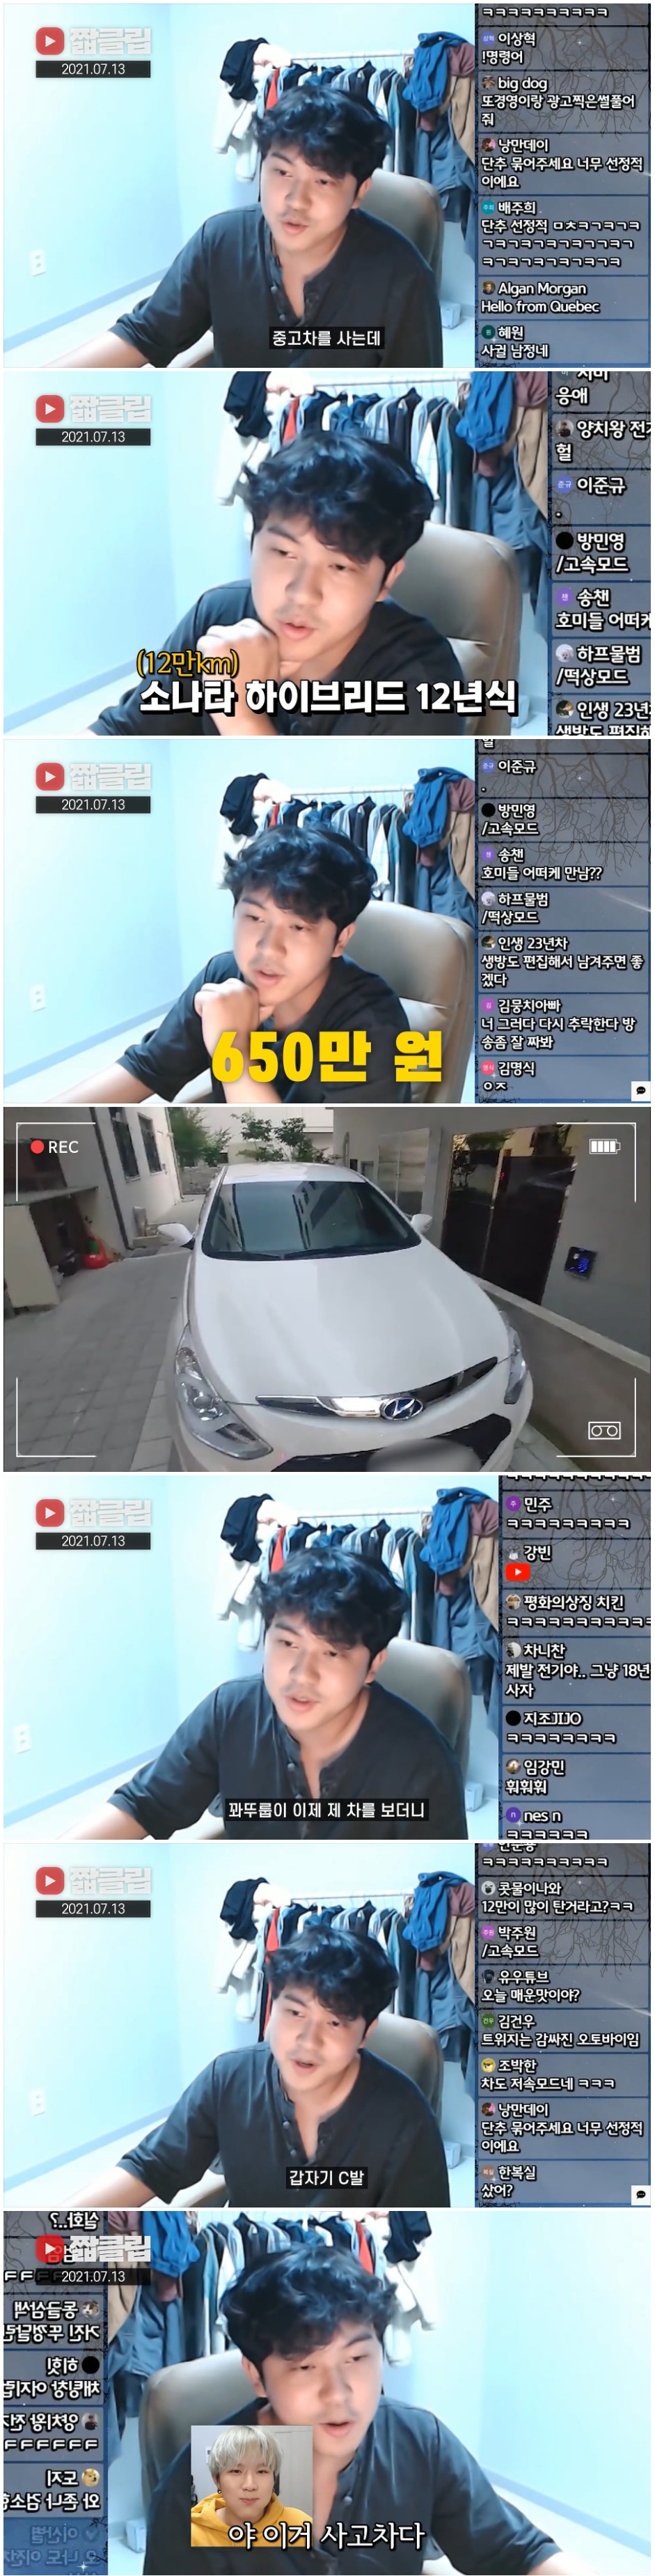 1 million YouTubers who got used cars.jpg.